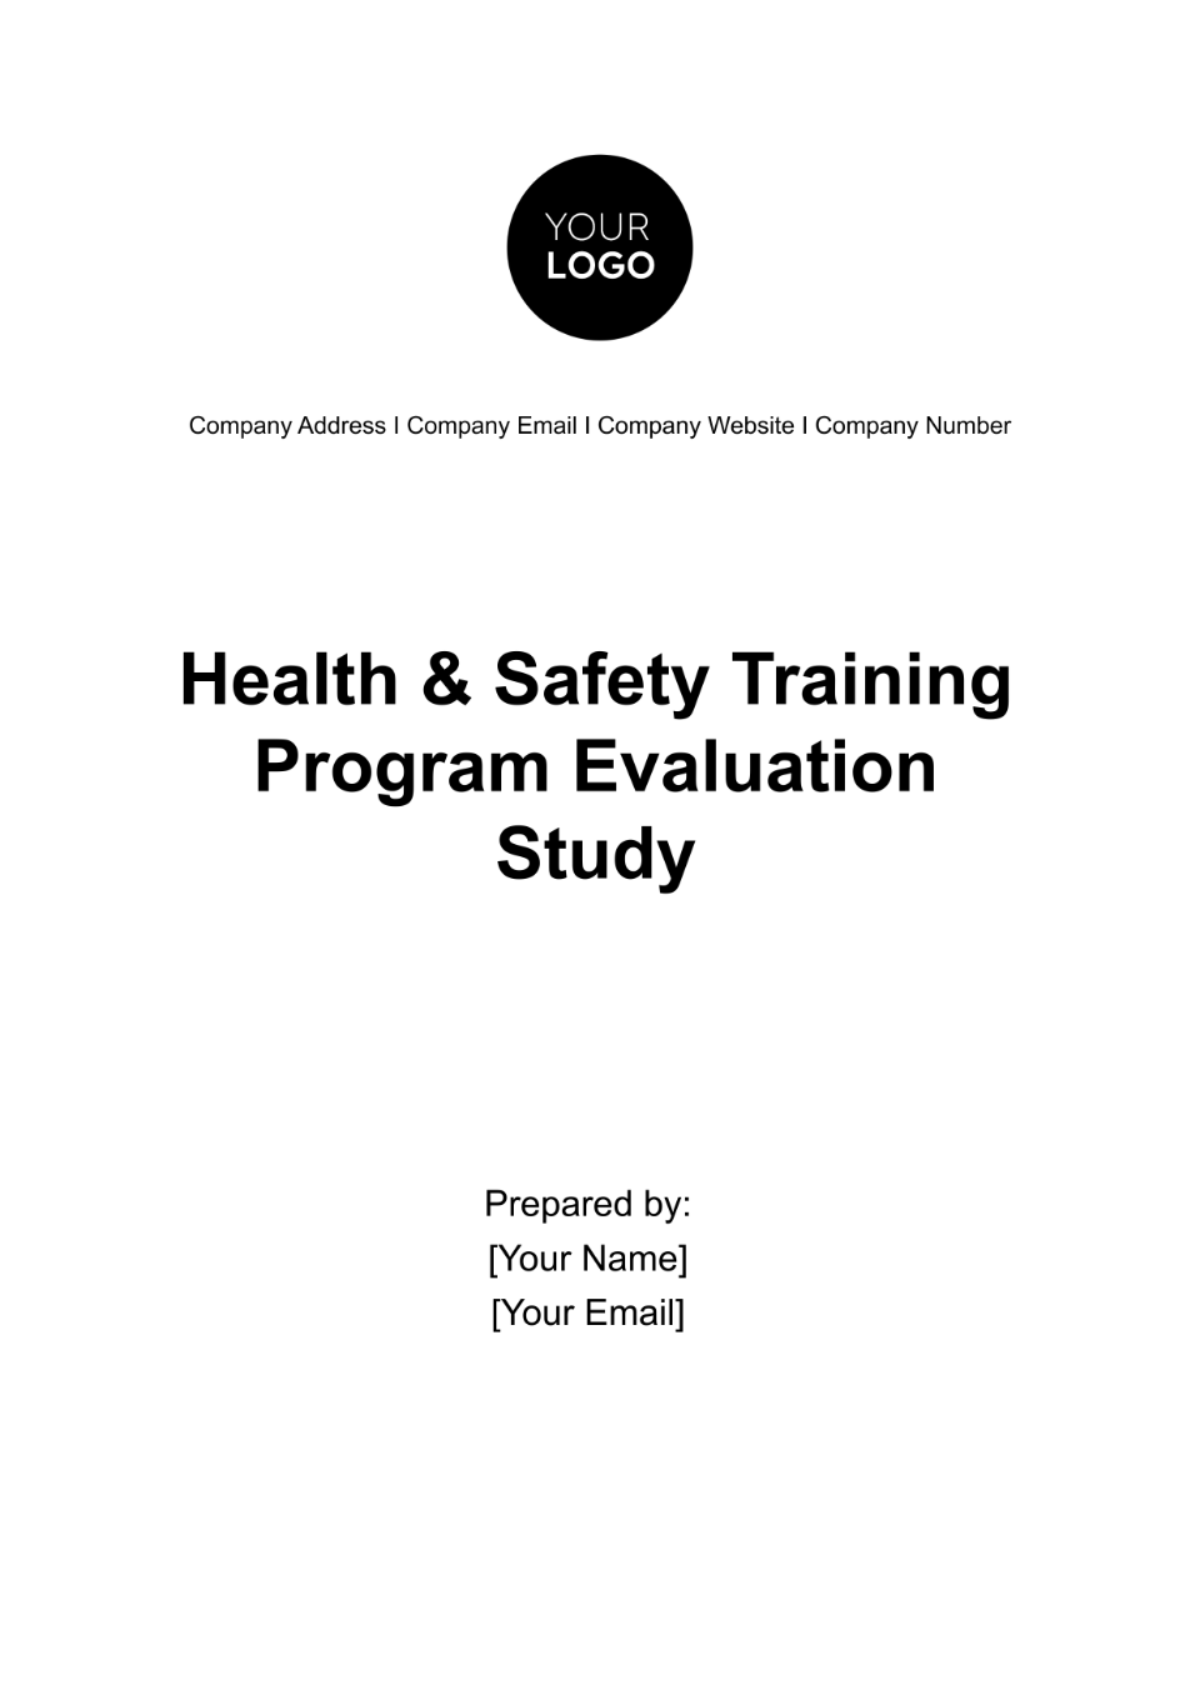 Health & Safety Training Program Evaluation Study Template